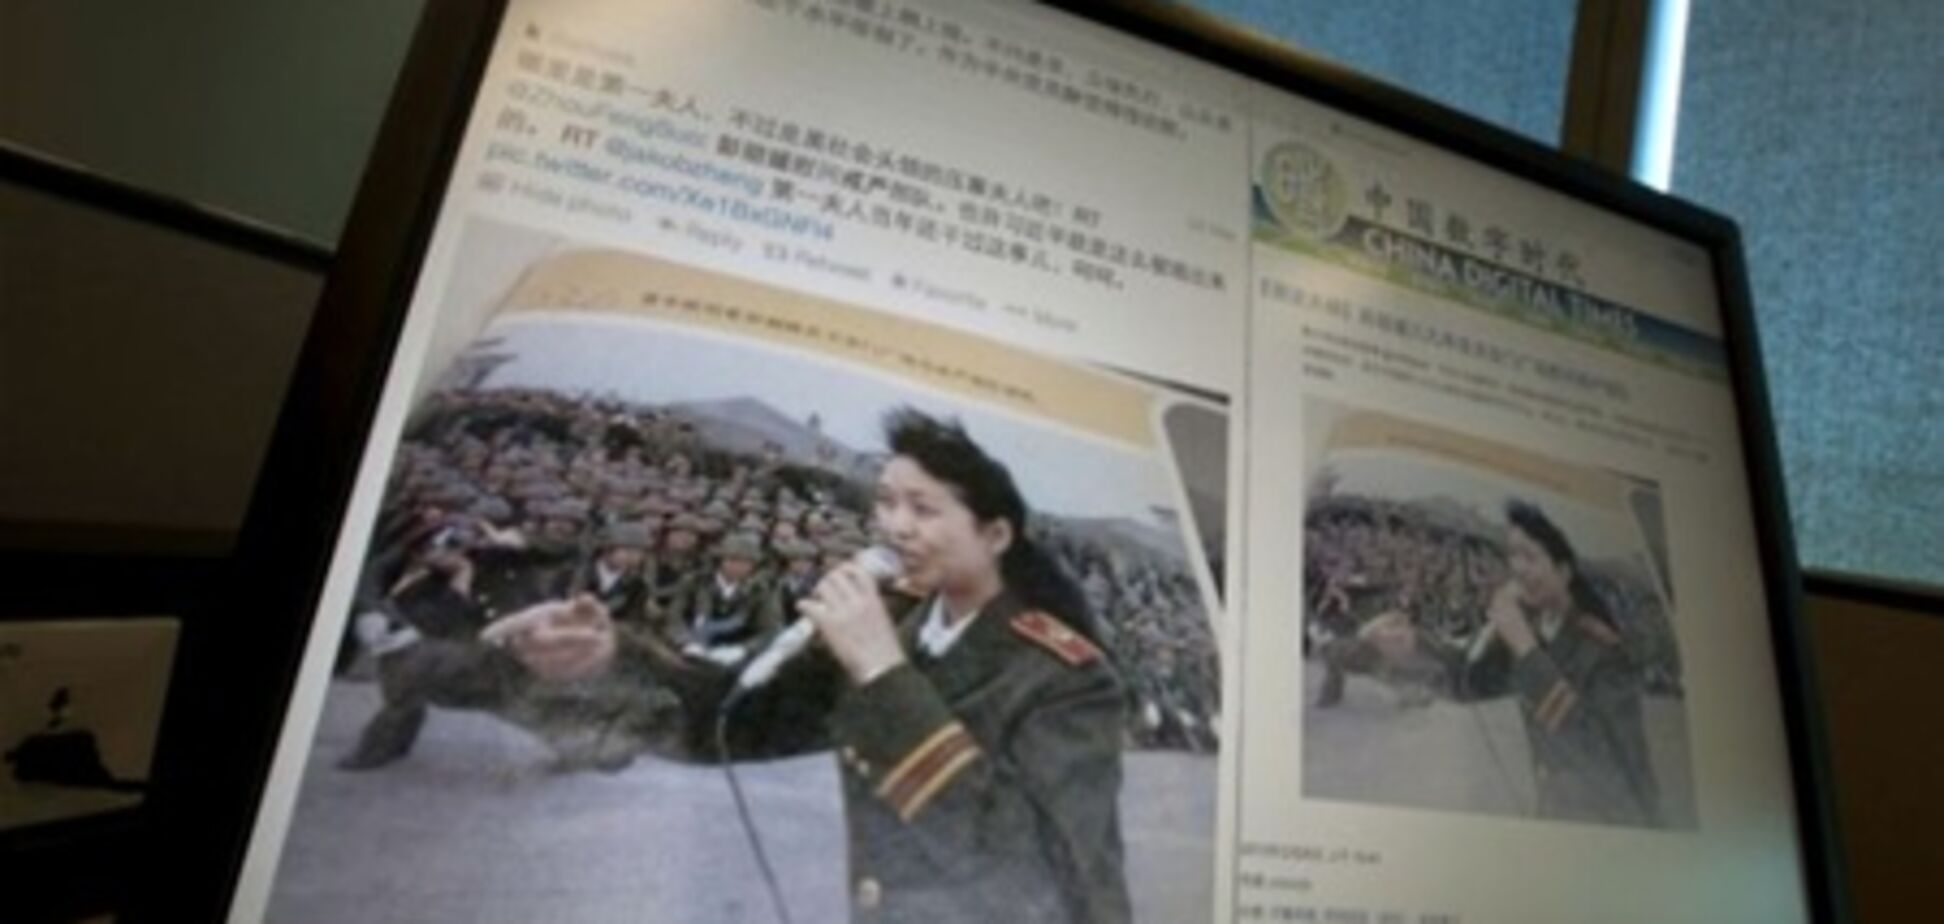 Из Интернета удалили компромат на первую леди Китая. Фото